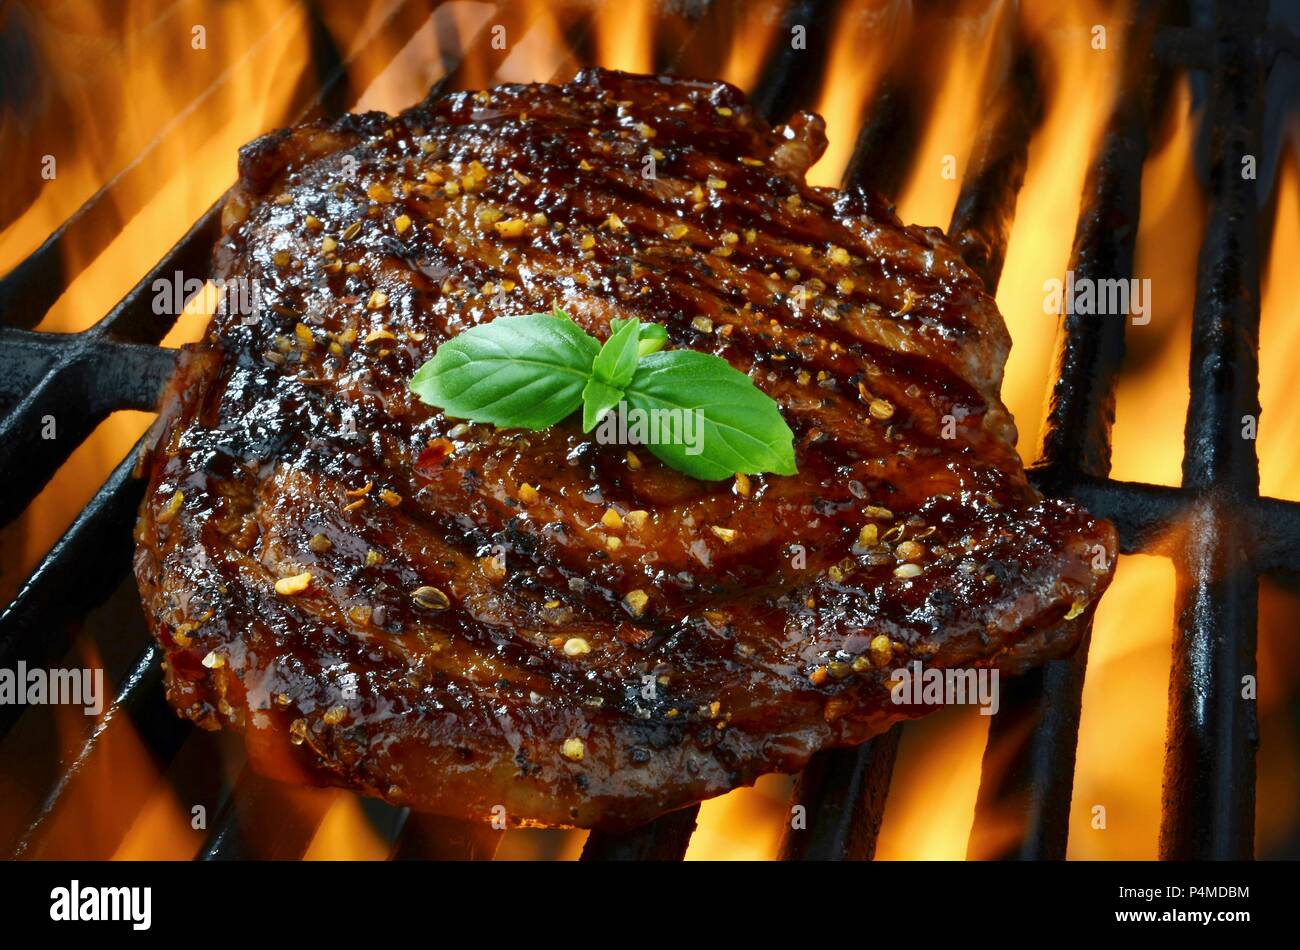 Rib eye steak on a flaming grill Stock Photo - Alamy